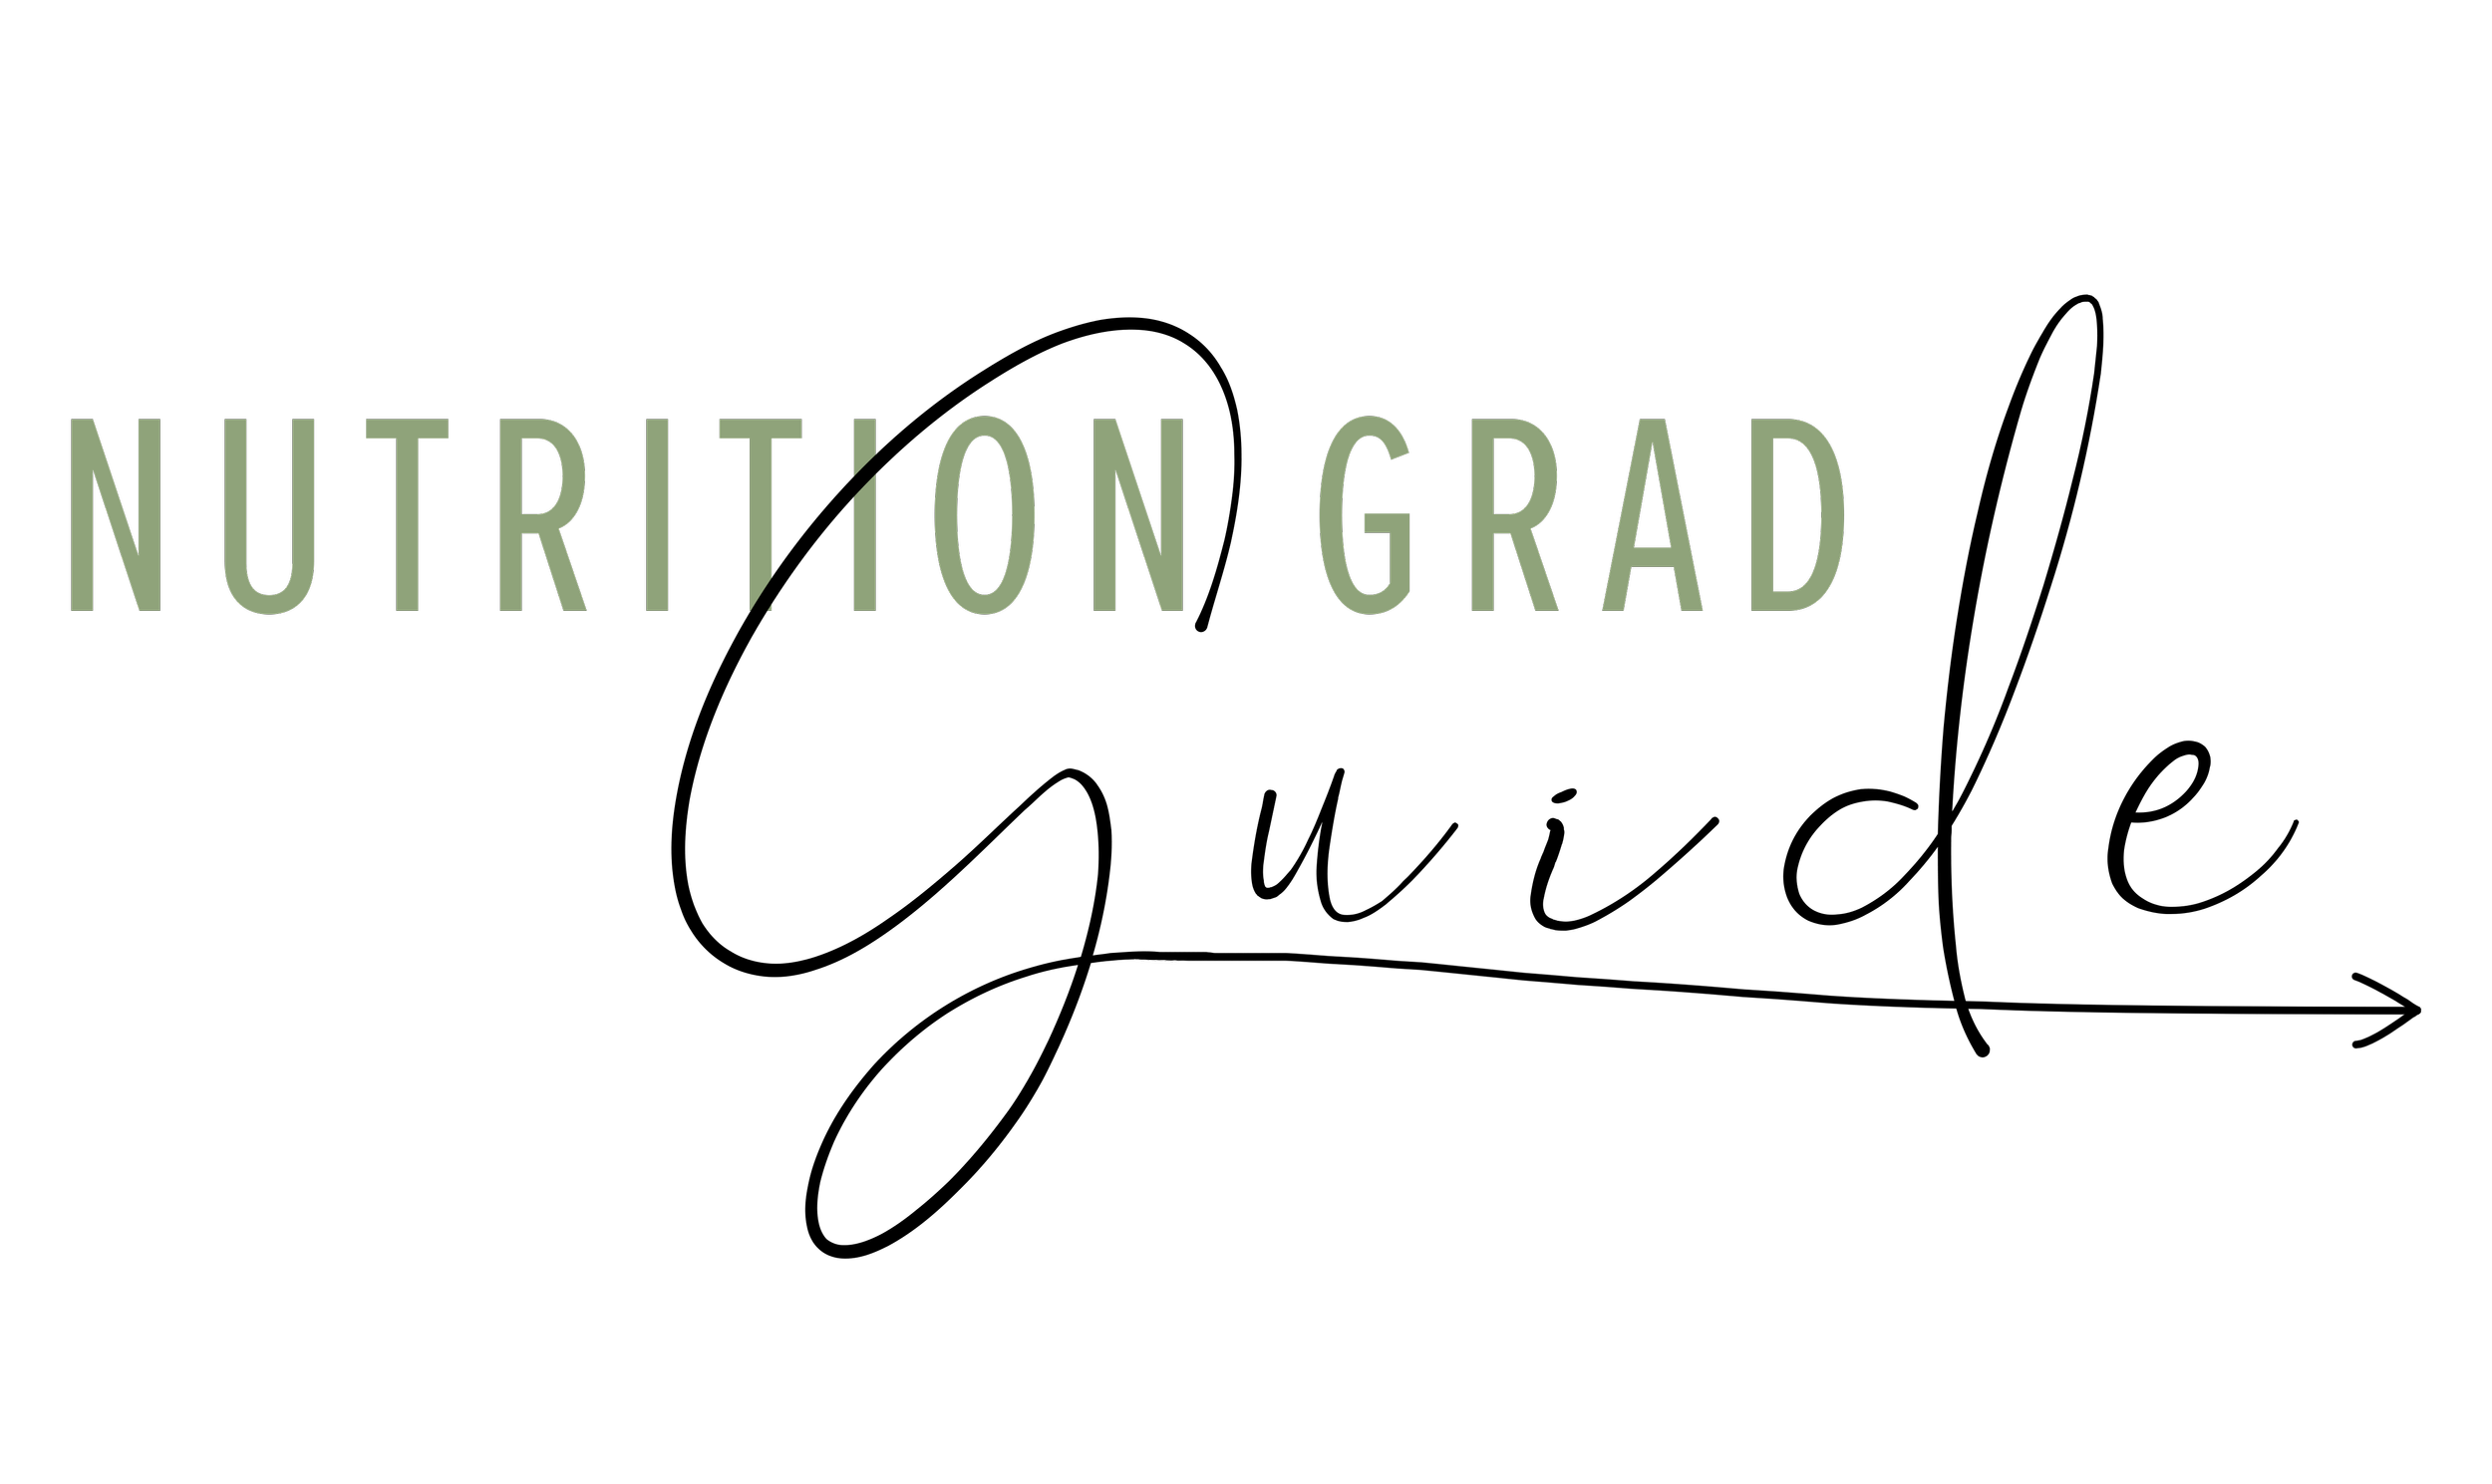 Nutrition Grad Guide